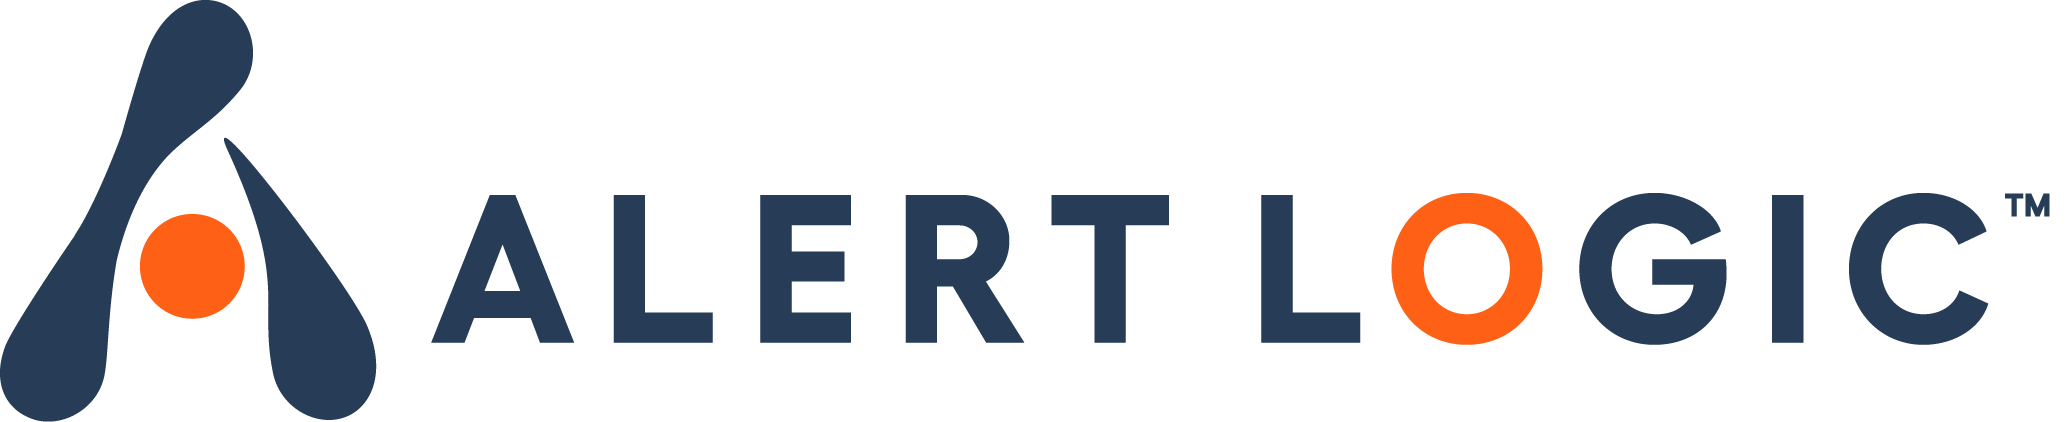 alert-logic-logo